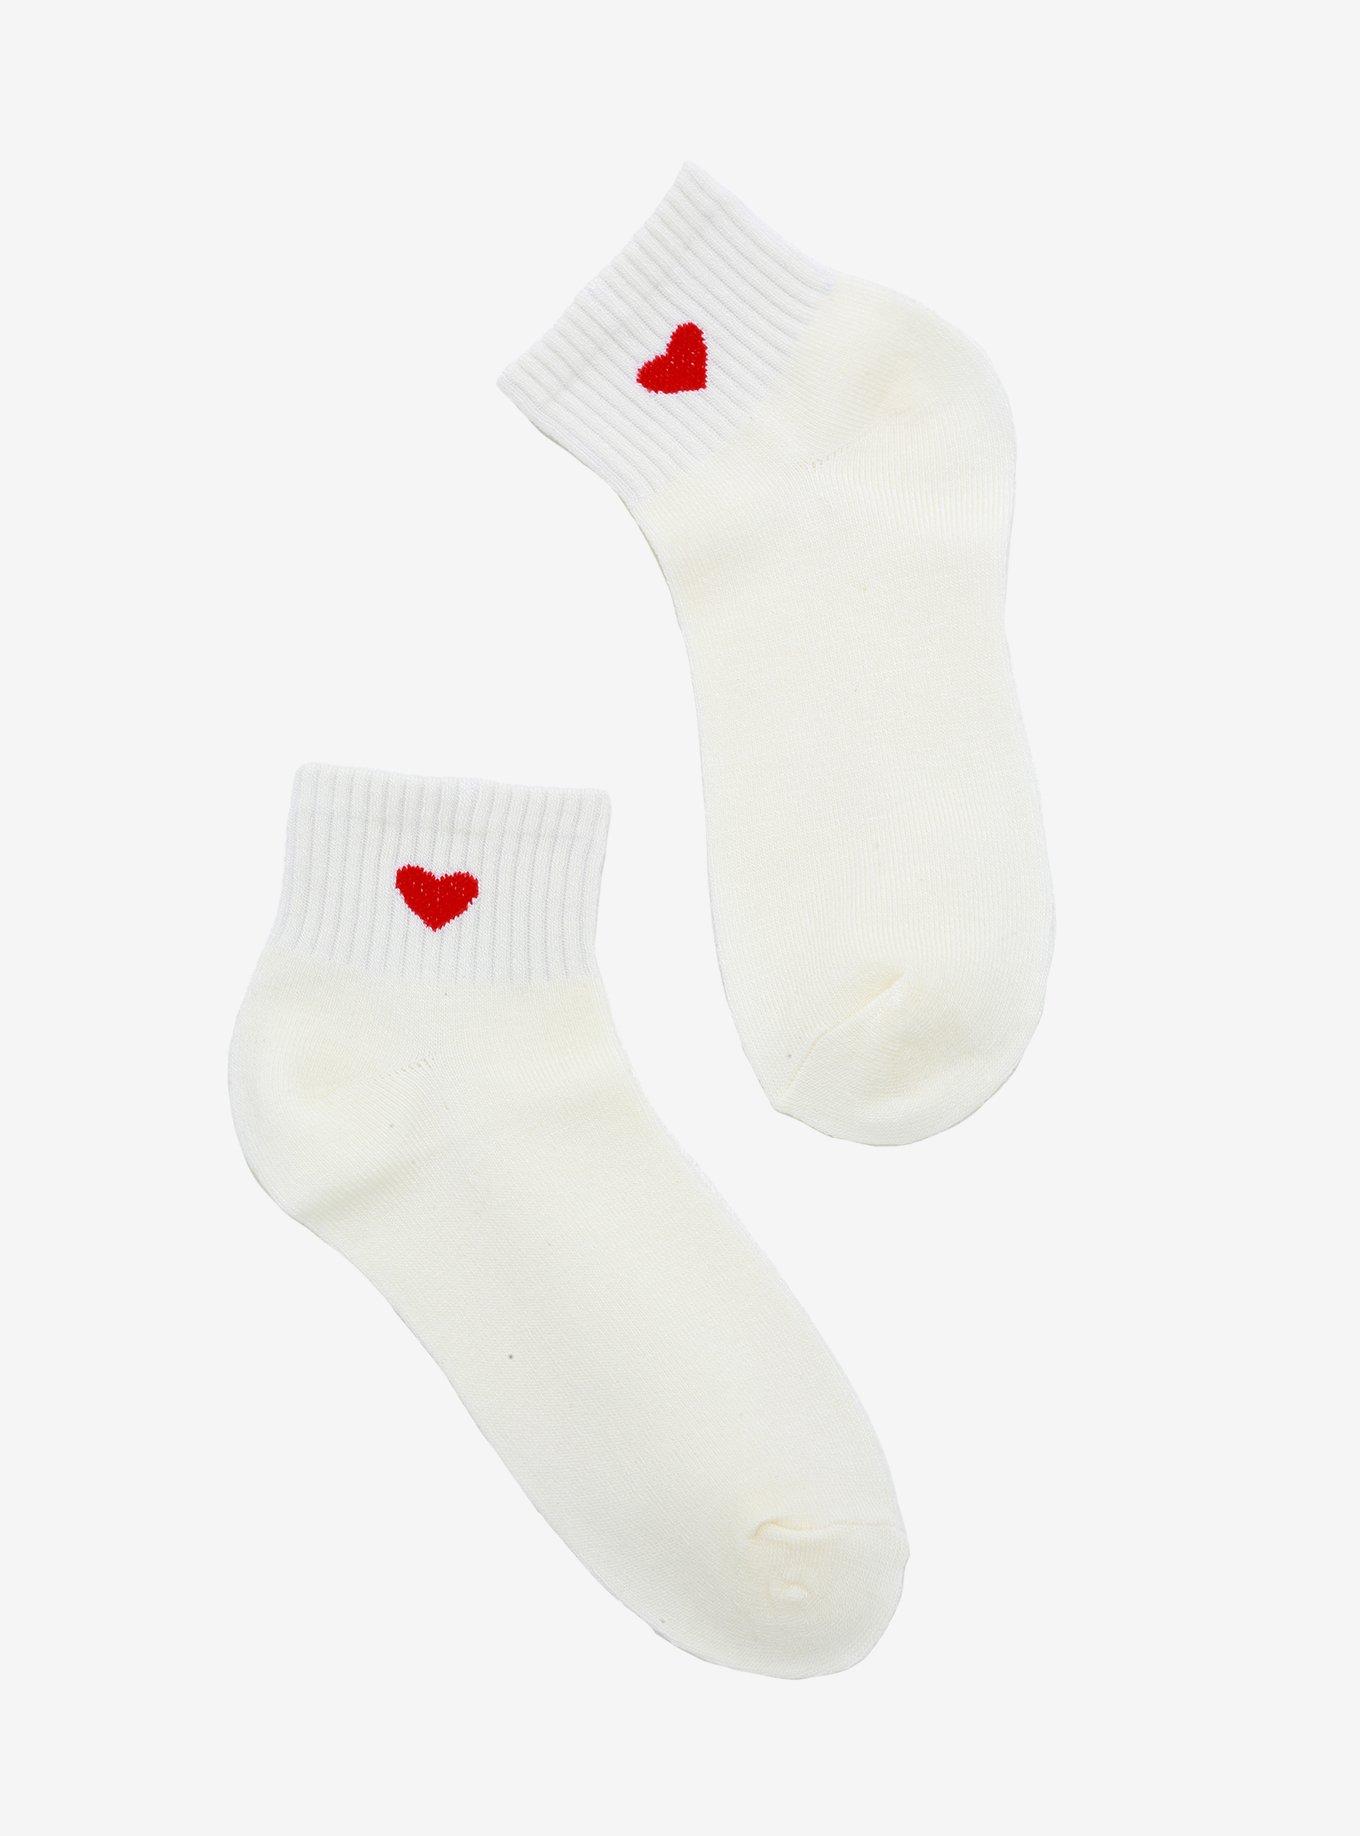 Tiny Heart Ankle Socks, , hi-res